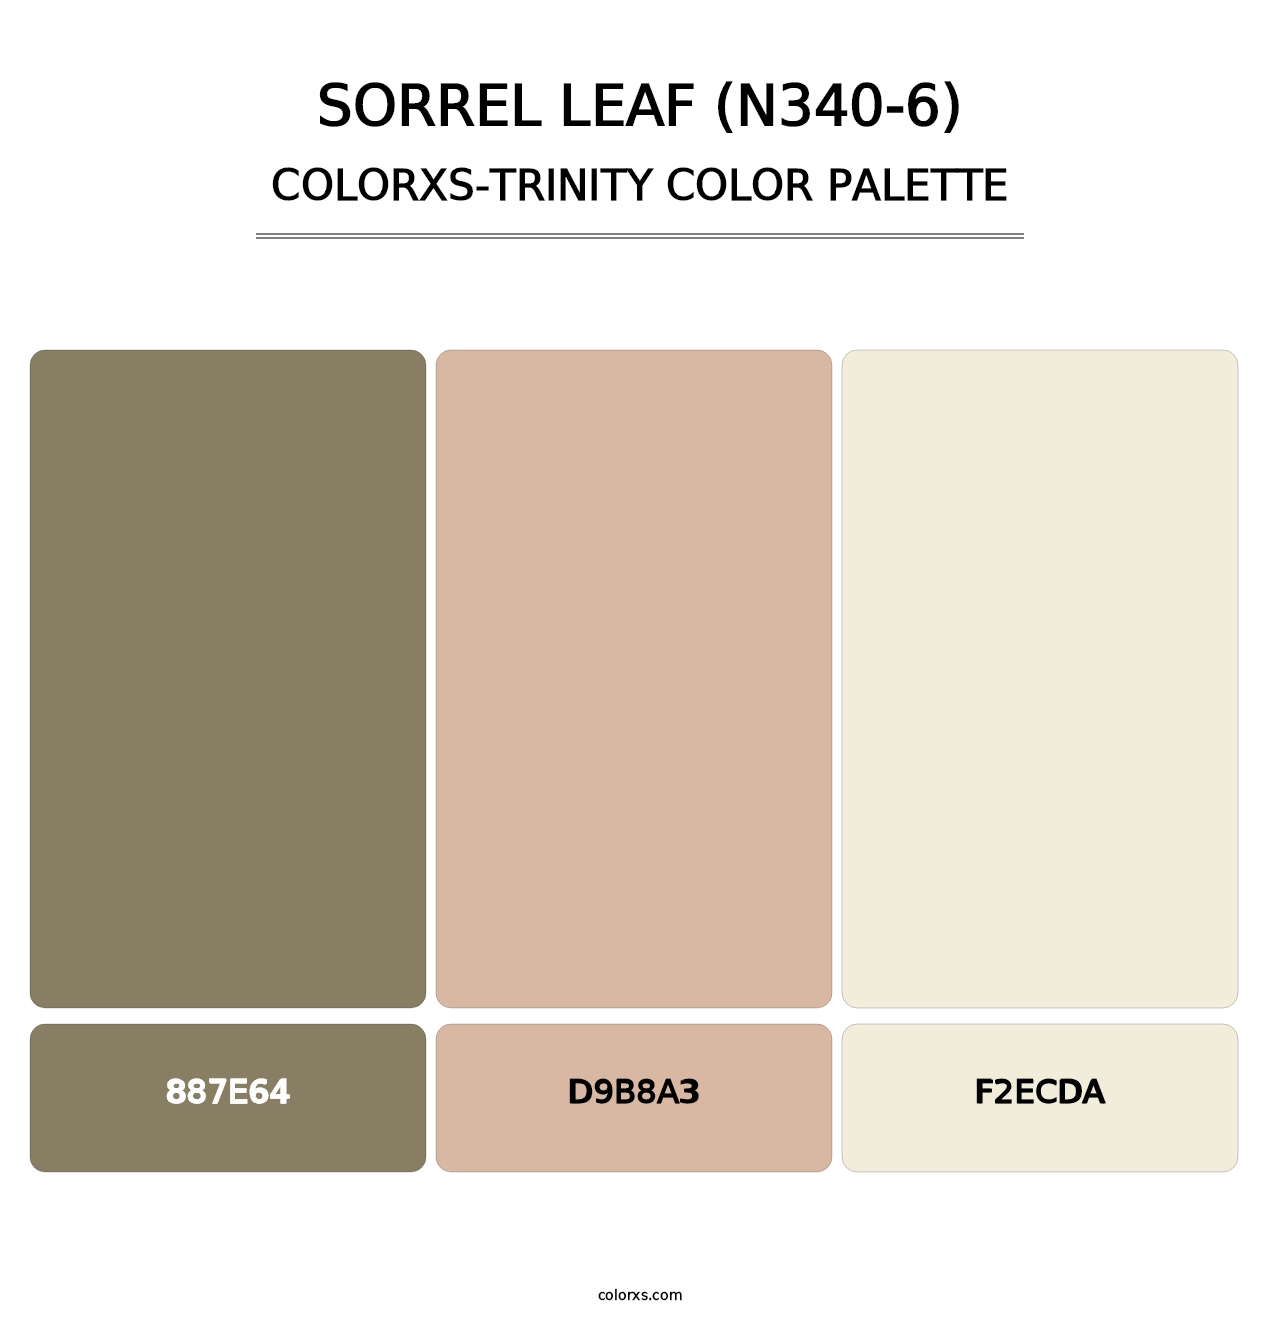 Sorrel Leaf (N340-6) - Colorxs Trinity Palette